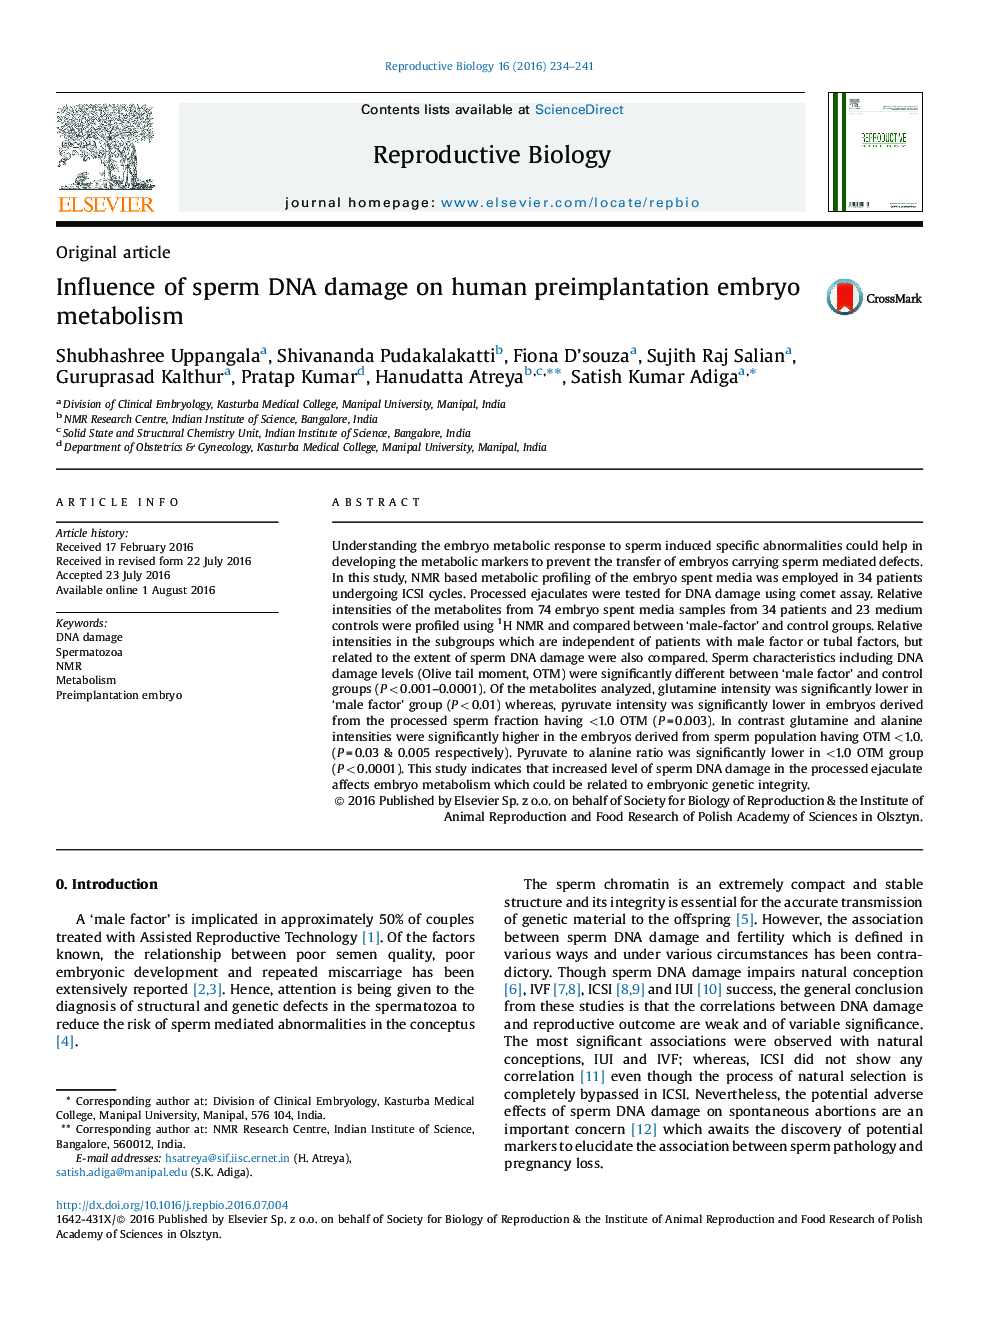 Original articleInfluence of sperm DNA damage on human preimplantation embryo metabolism